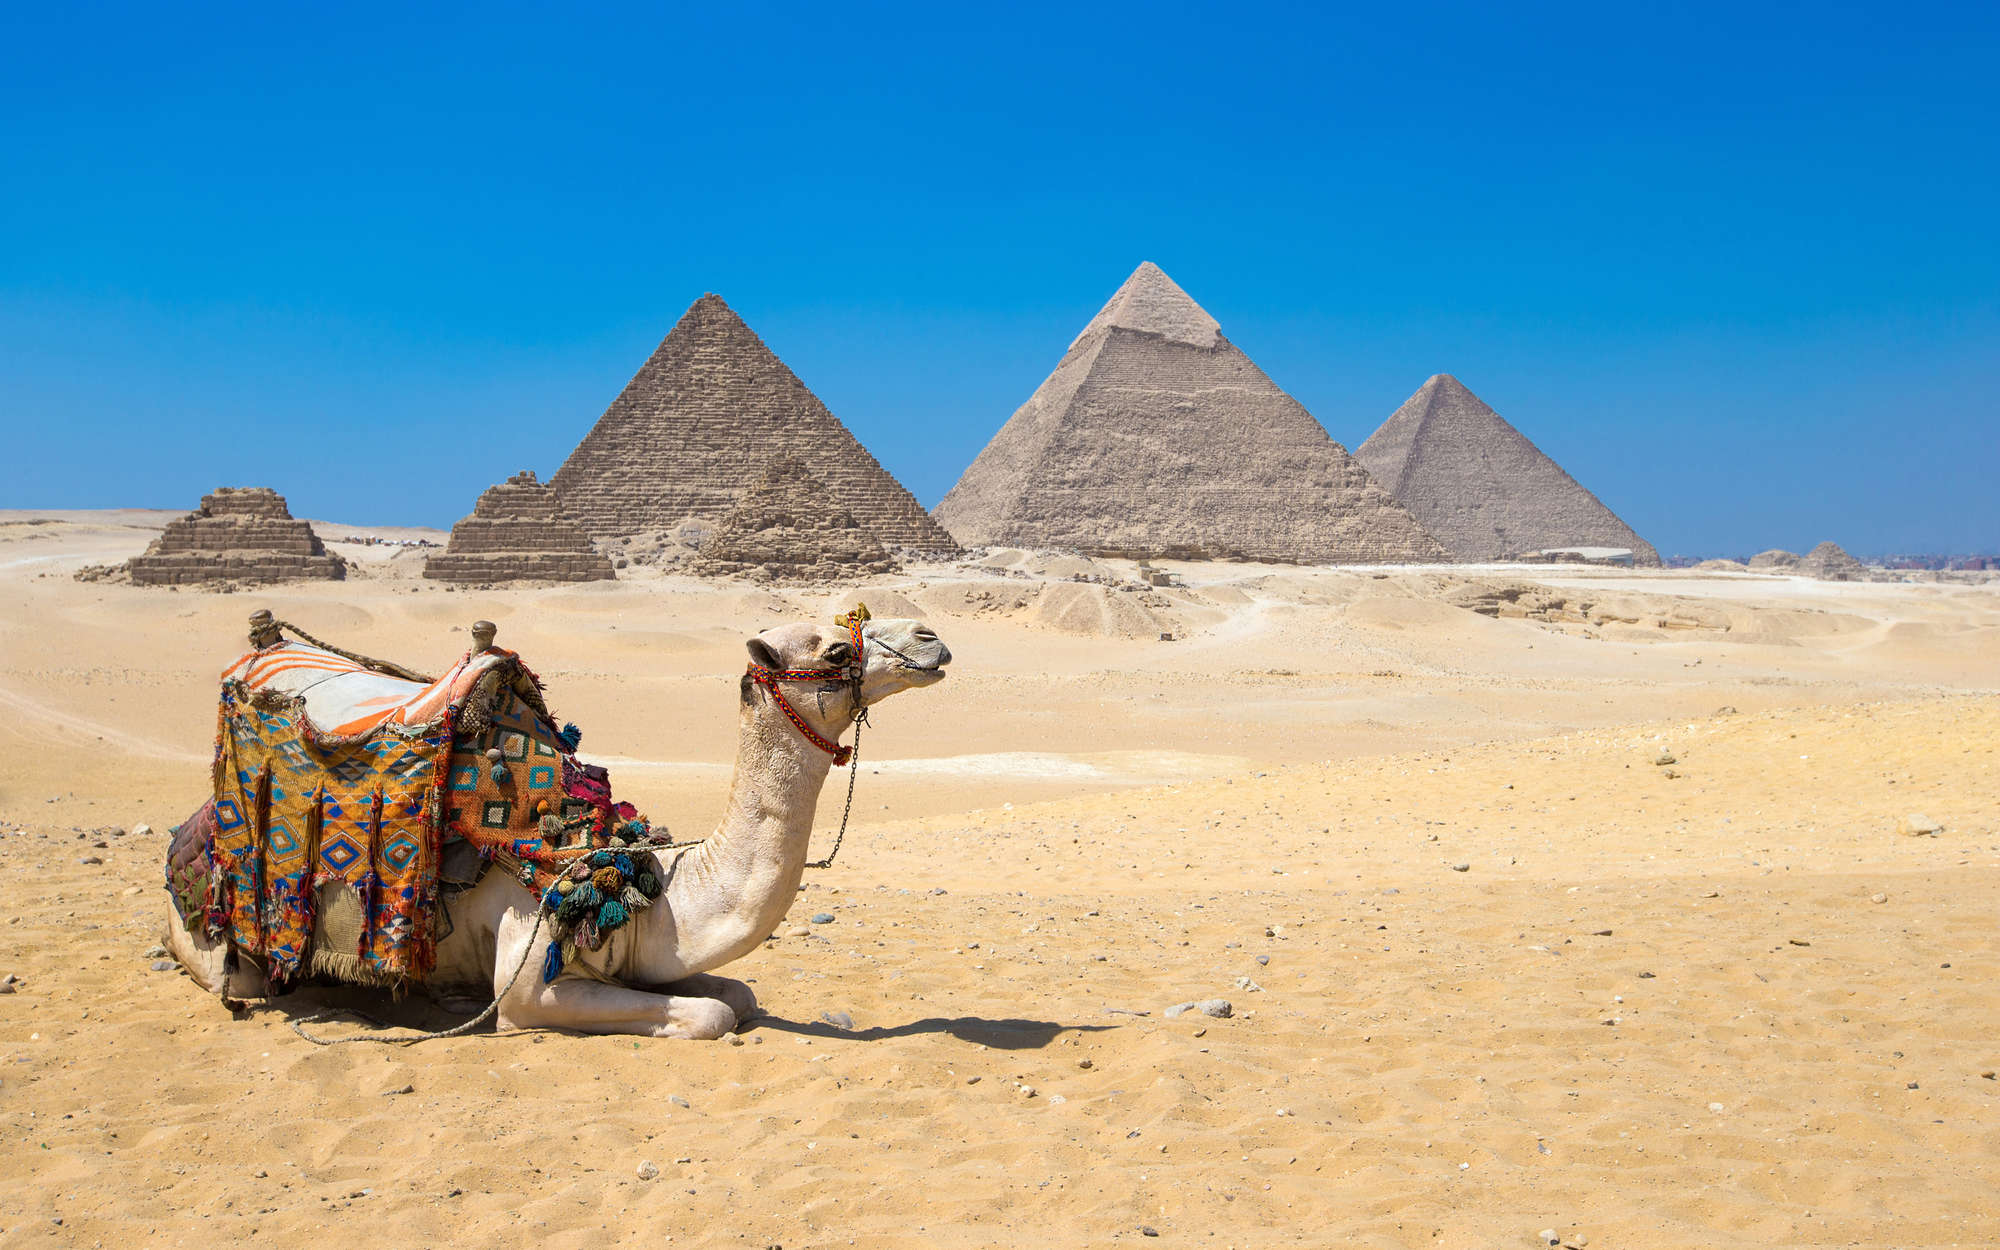             Piramides van Gizeh met Camel behang - Mat glad vlies
        